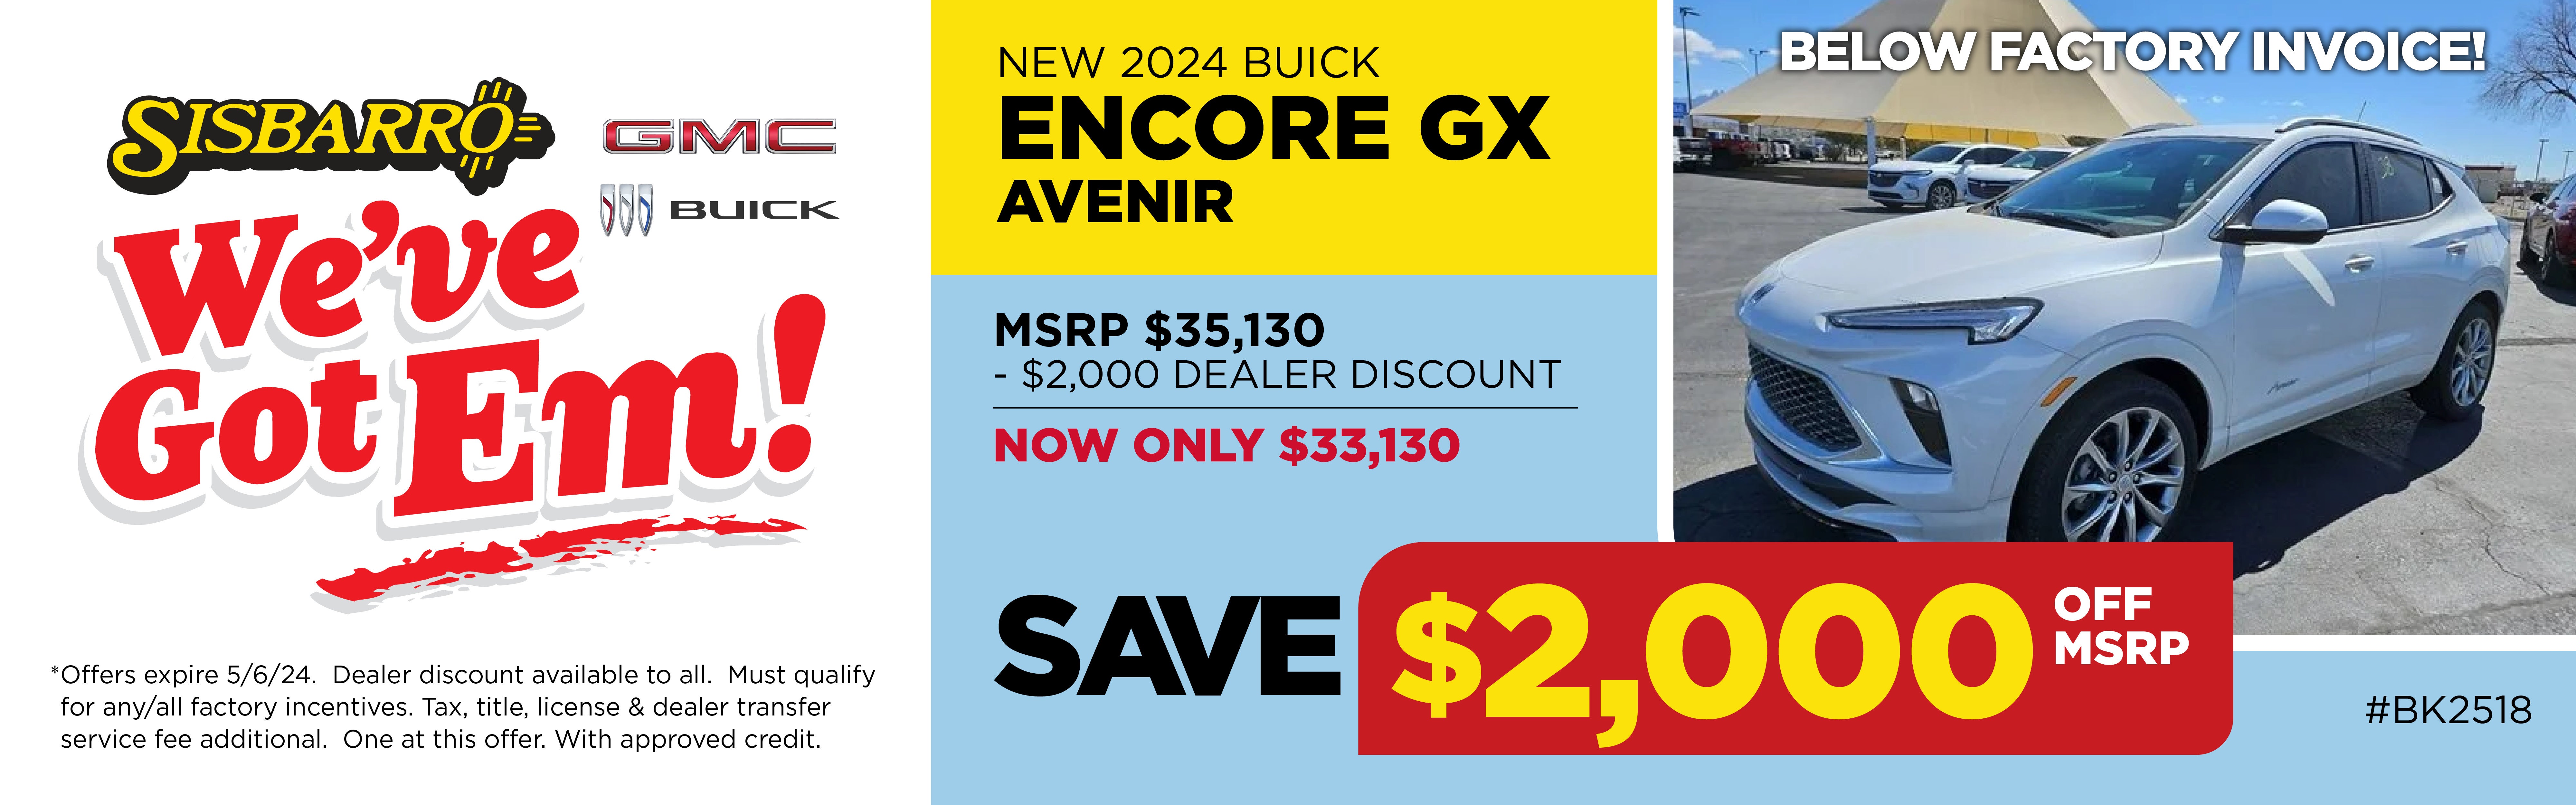 New 2024 Buick Encore GX Avenir